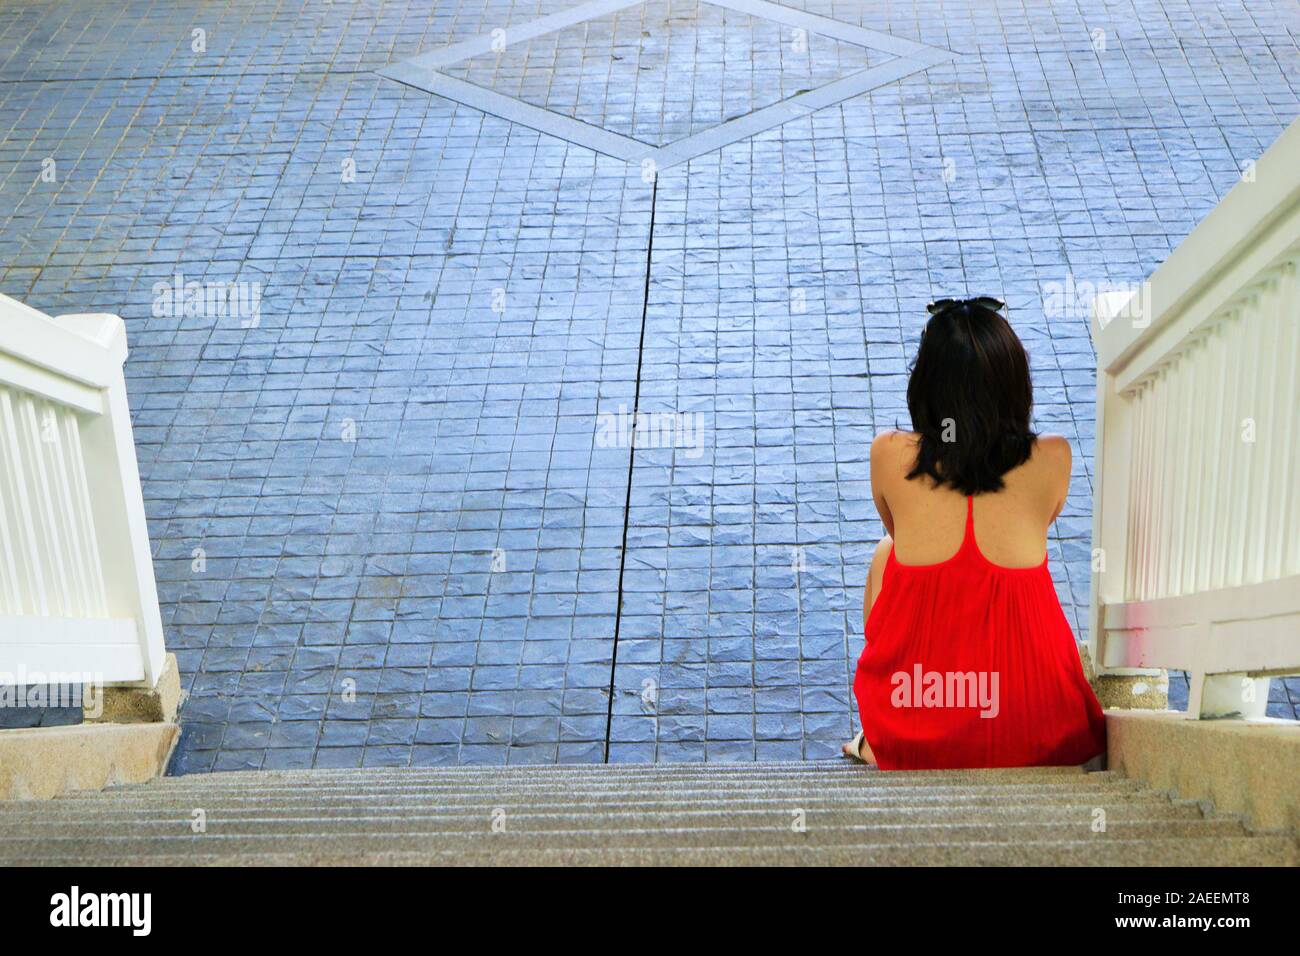 Women in red dress sitting on steps, Phuket, Thailand, Asia Stock Photo